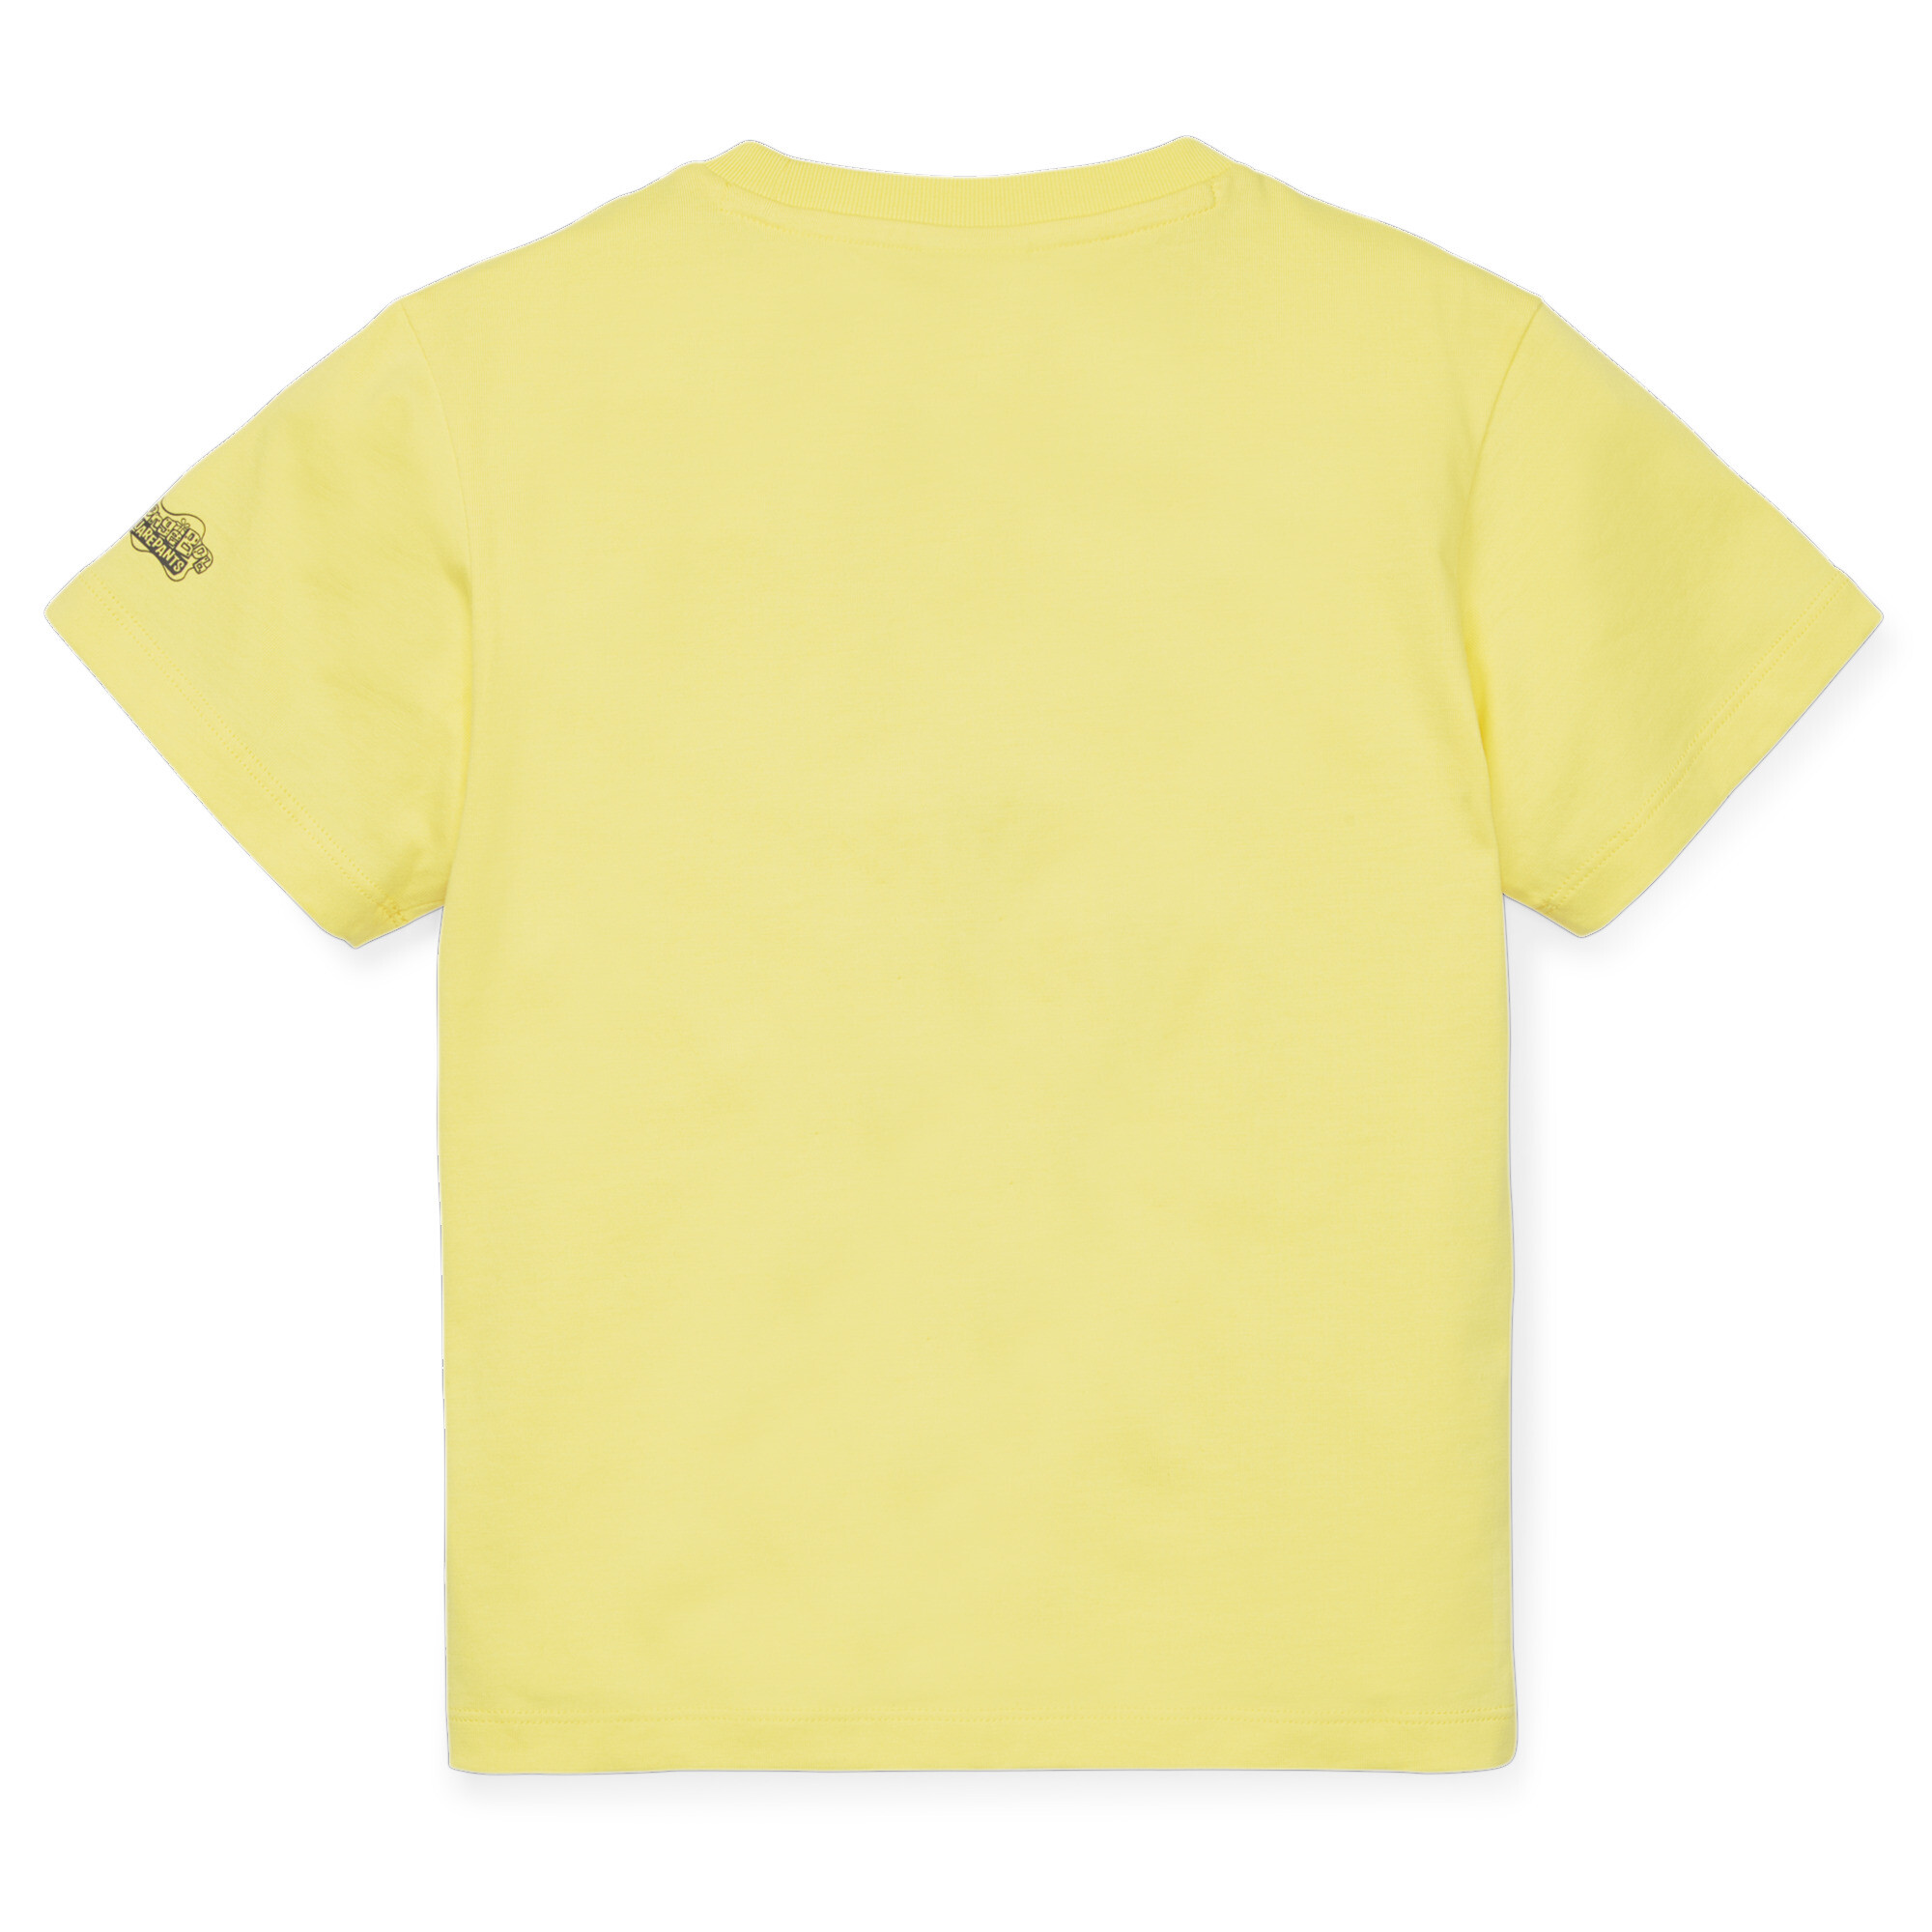 PUMA X SPONGEBOB T-Shirt Kids In Yellow, Size 13-14 Youth